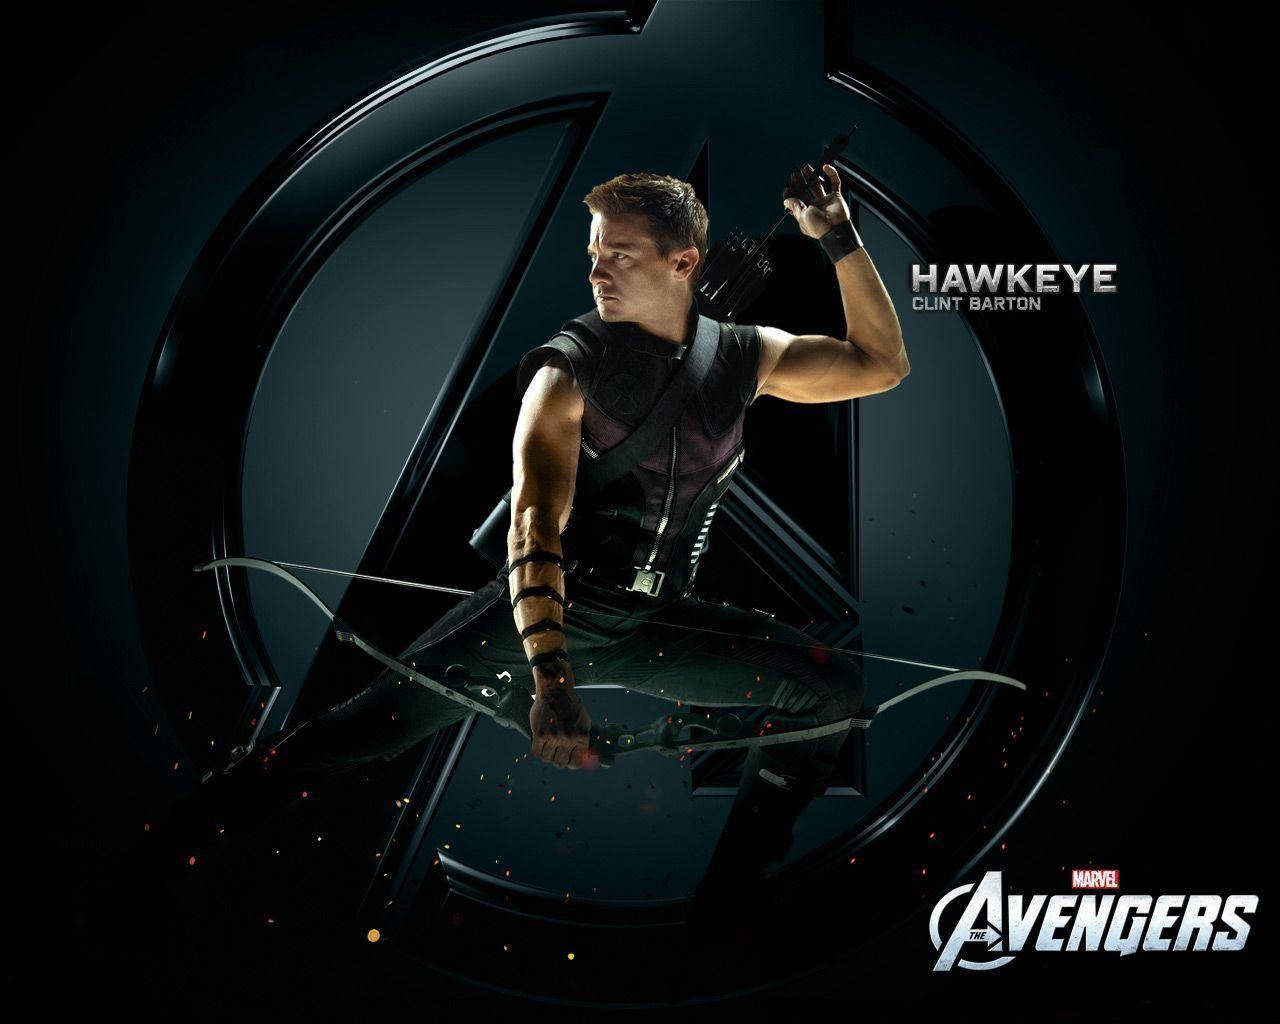 Avengers Hawkeye Clint Barton